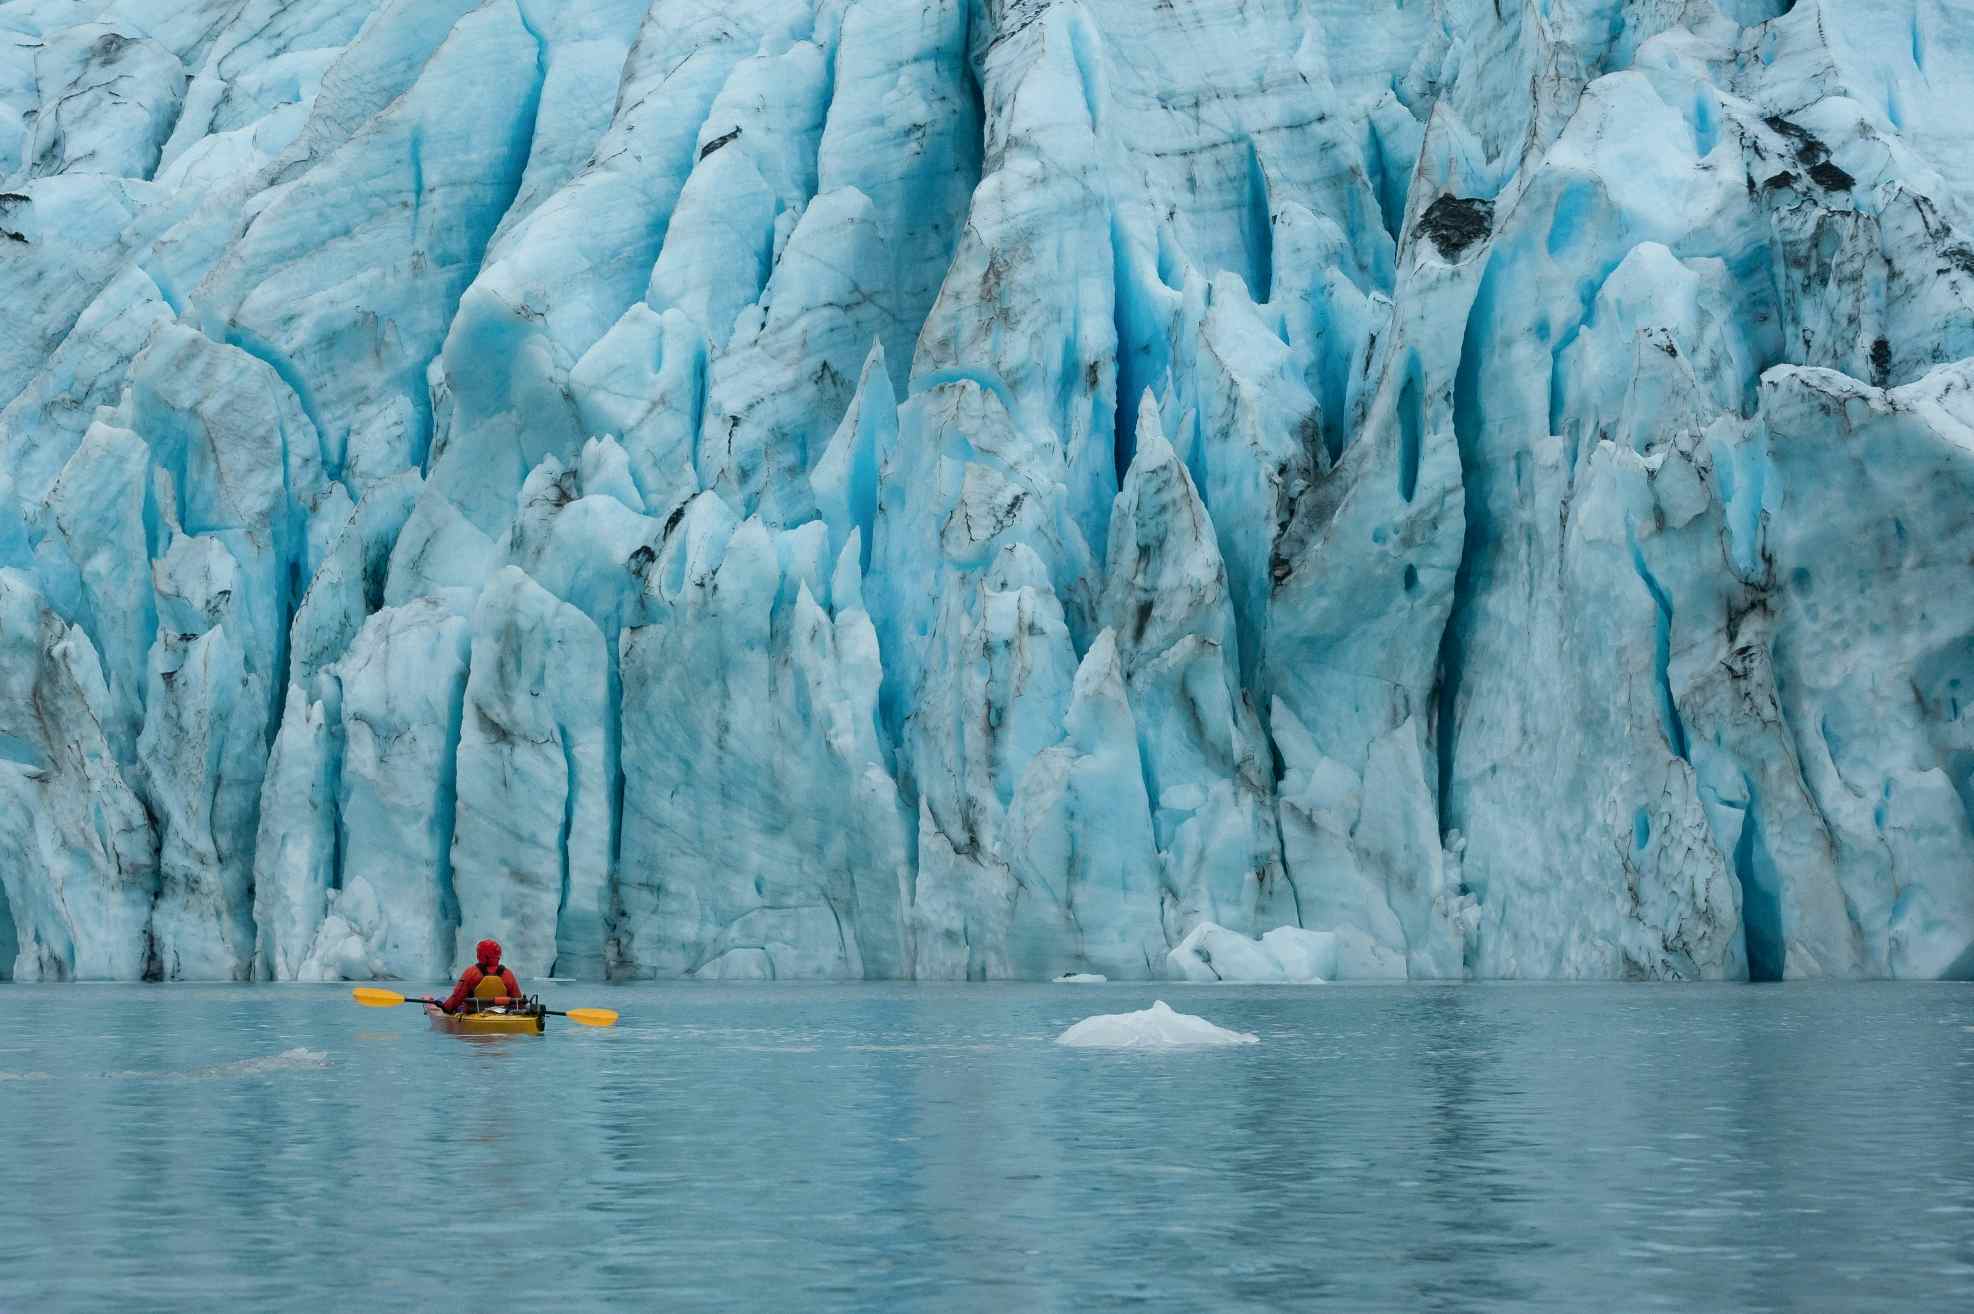 Shoup Glacier, Valdez, Alaska
Shutterstock: 175476869